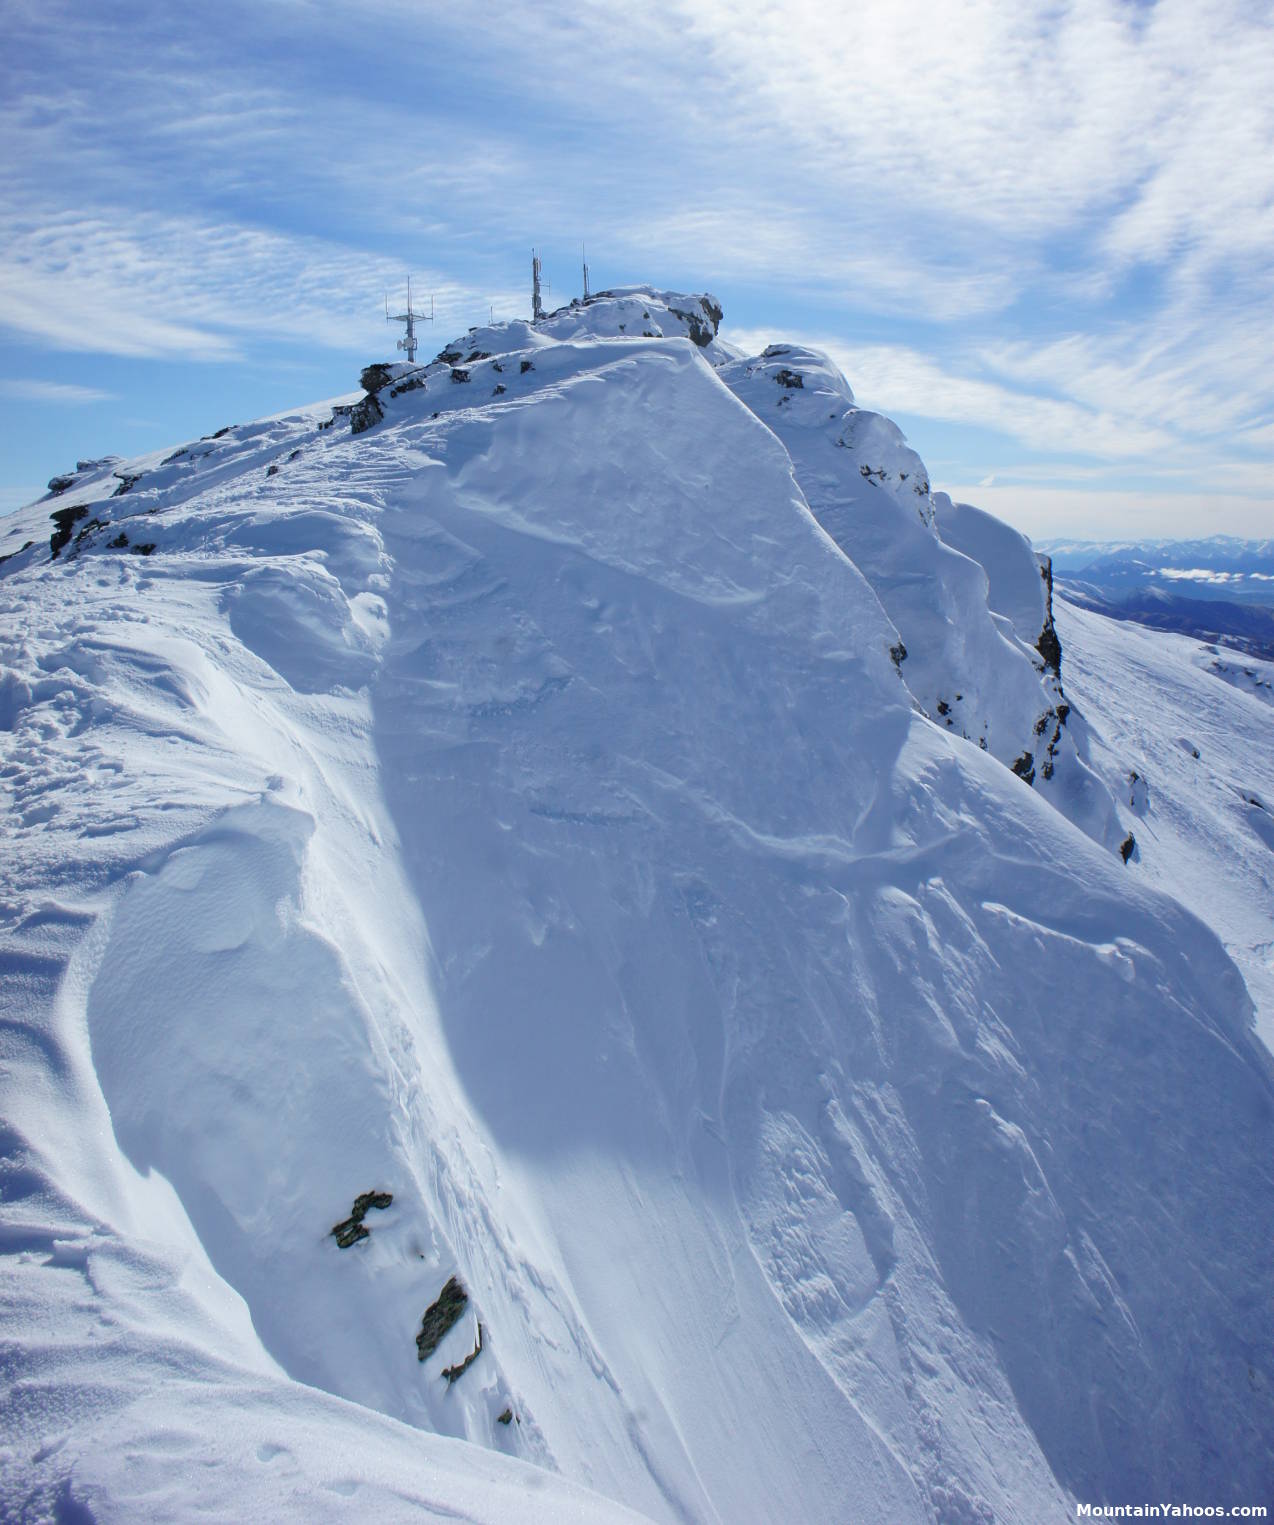 Part three: ski the chutes